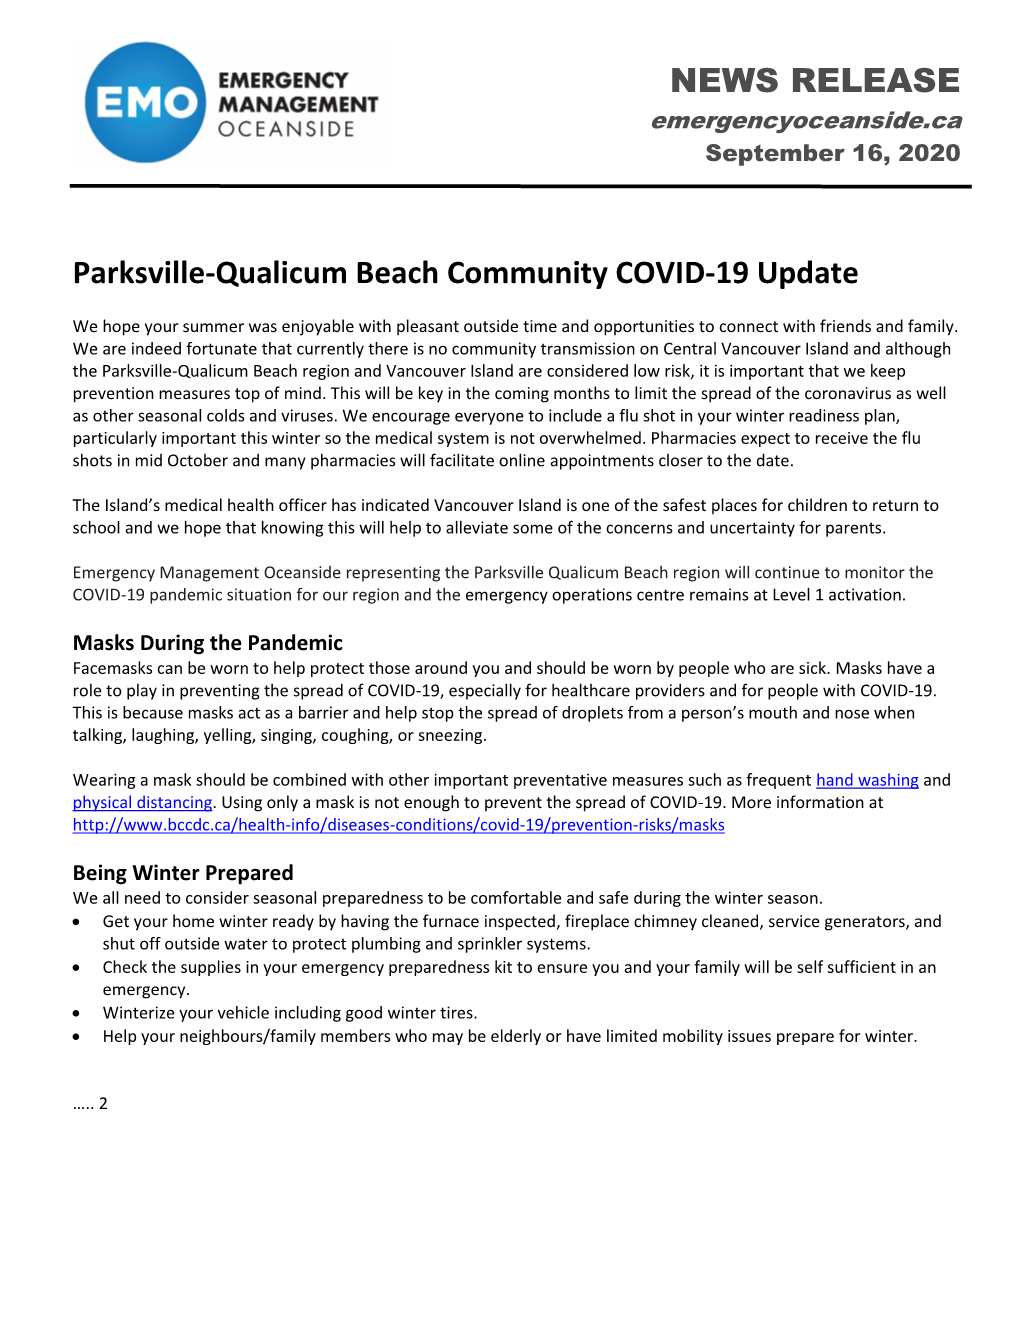 NEWS RELEASE Parksville-Qualicum Beach